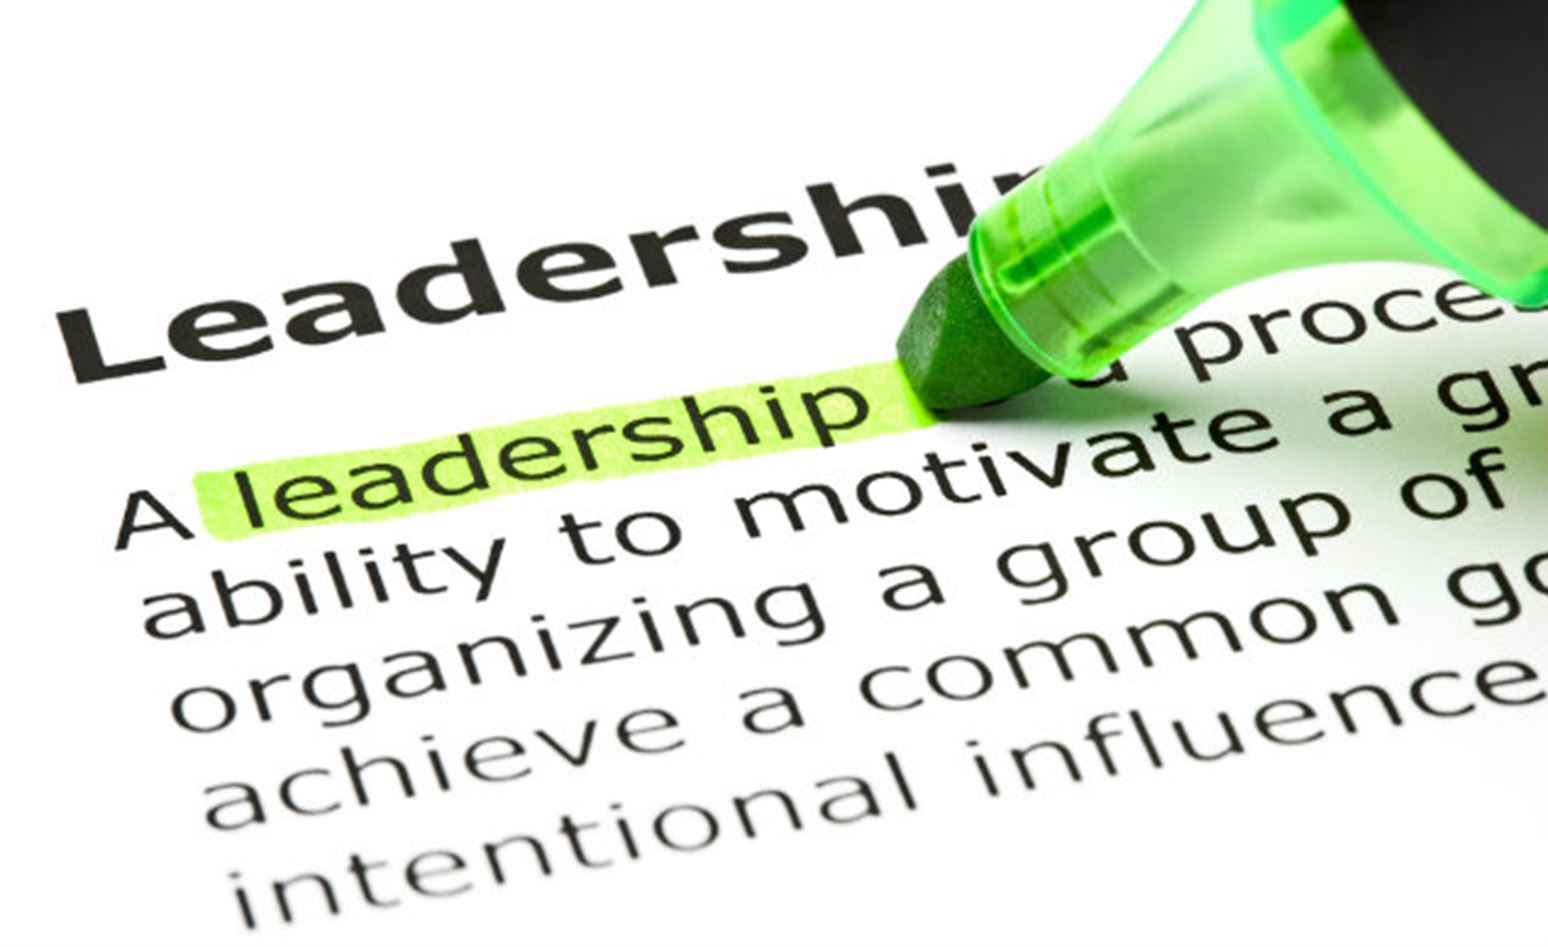 Impact: Mary Crossan on leadership character